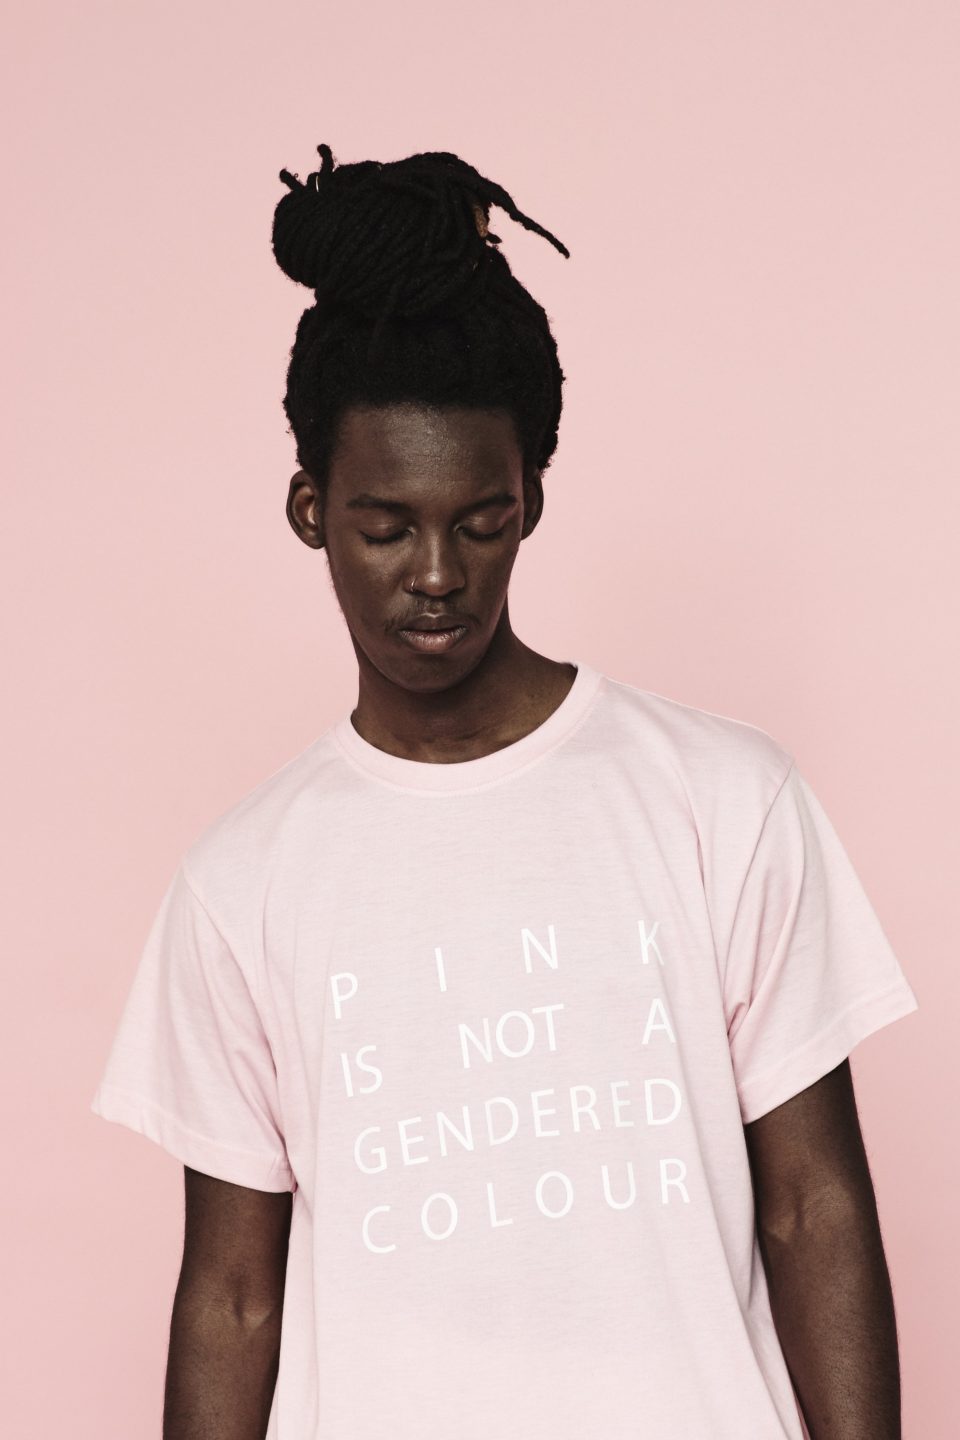 ArtClub&Friends_pink is not gendered